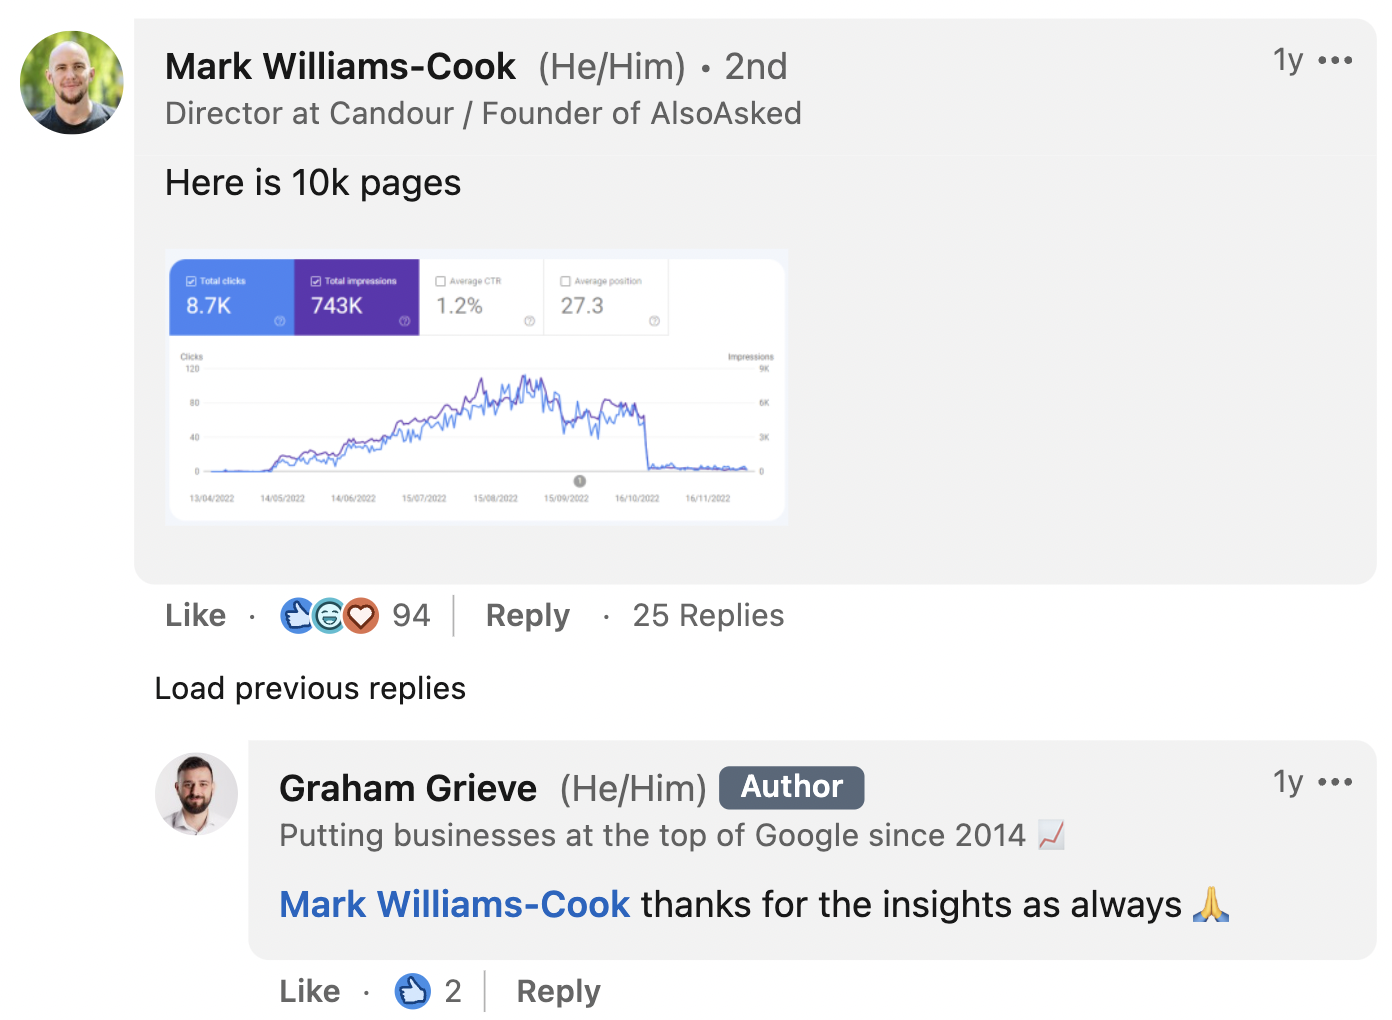 Mark-Williams Cook's LinkedIn post